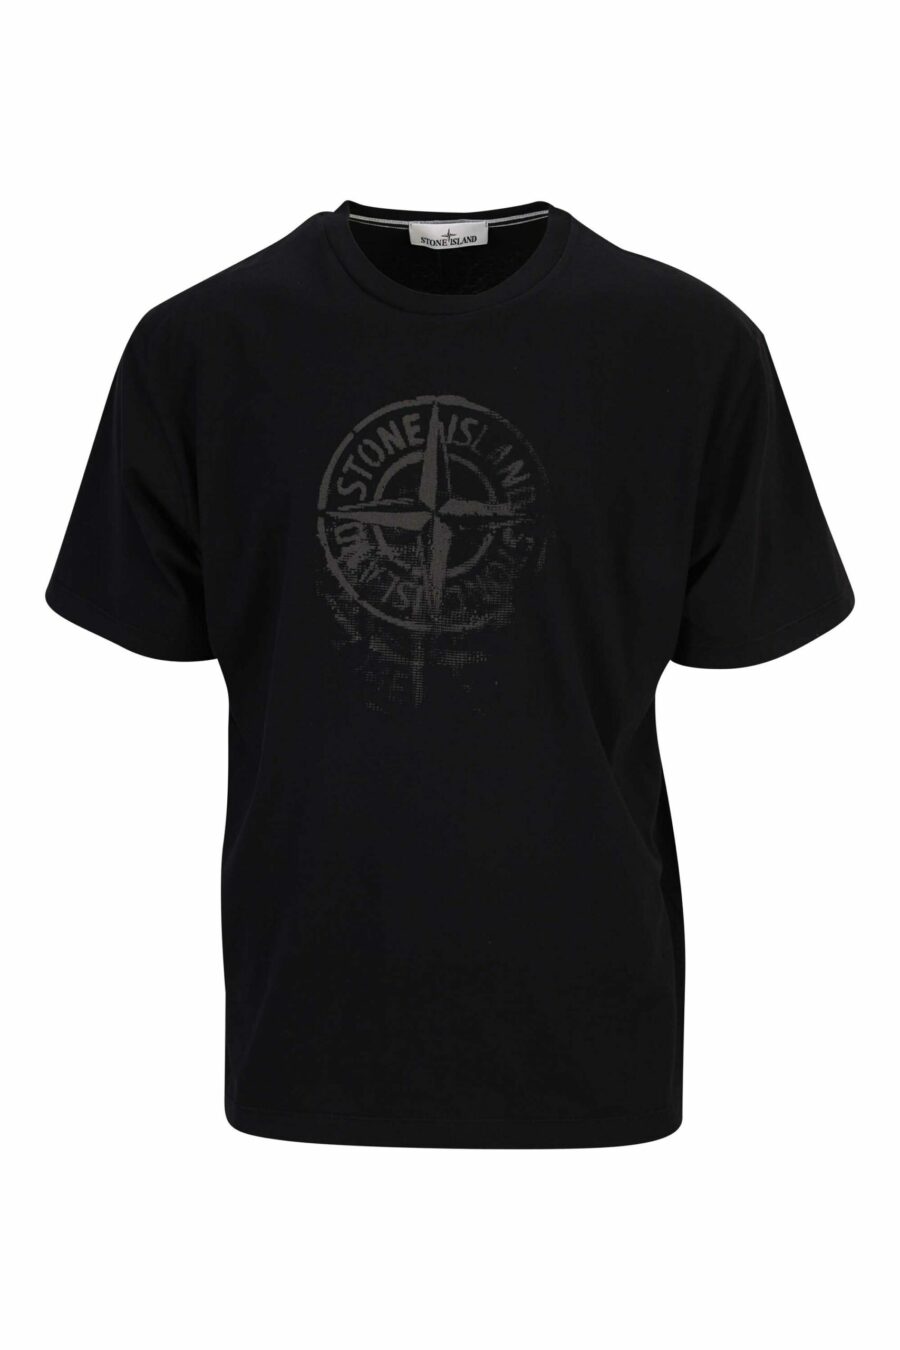 Camiseta negra con maxilogo brújula - 8052572907272 scaled